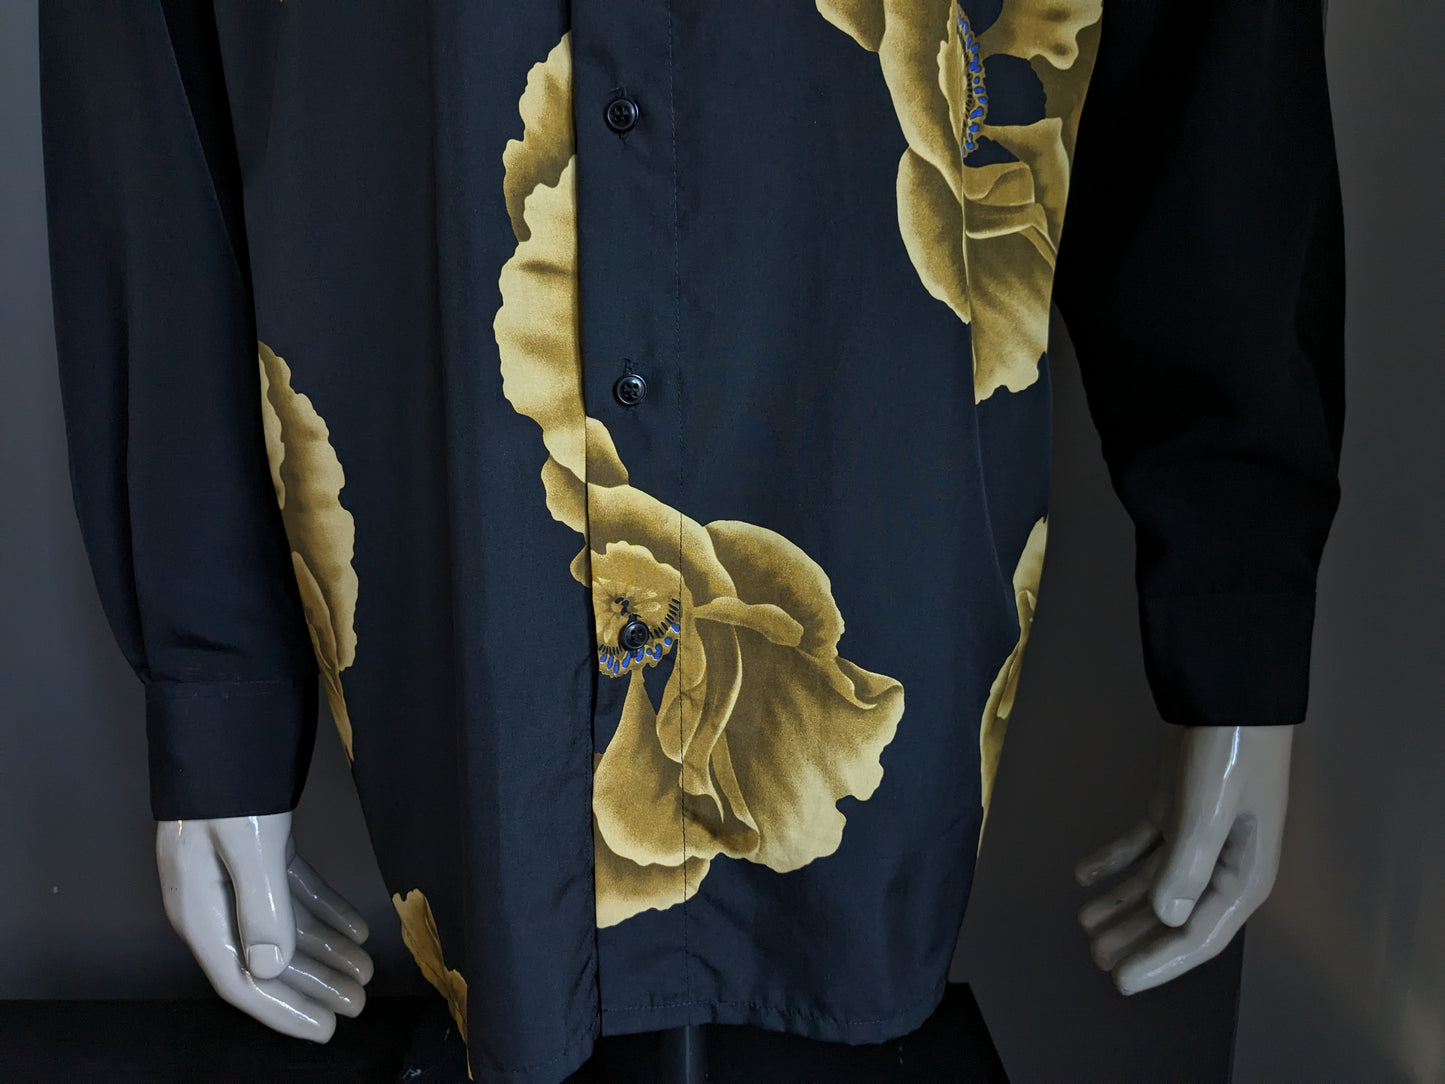 Camisa Vintage St. Clou. Impresión de flores de color oro negro. Tamaño xl.